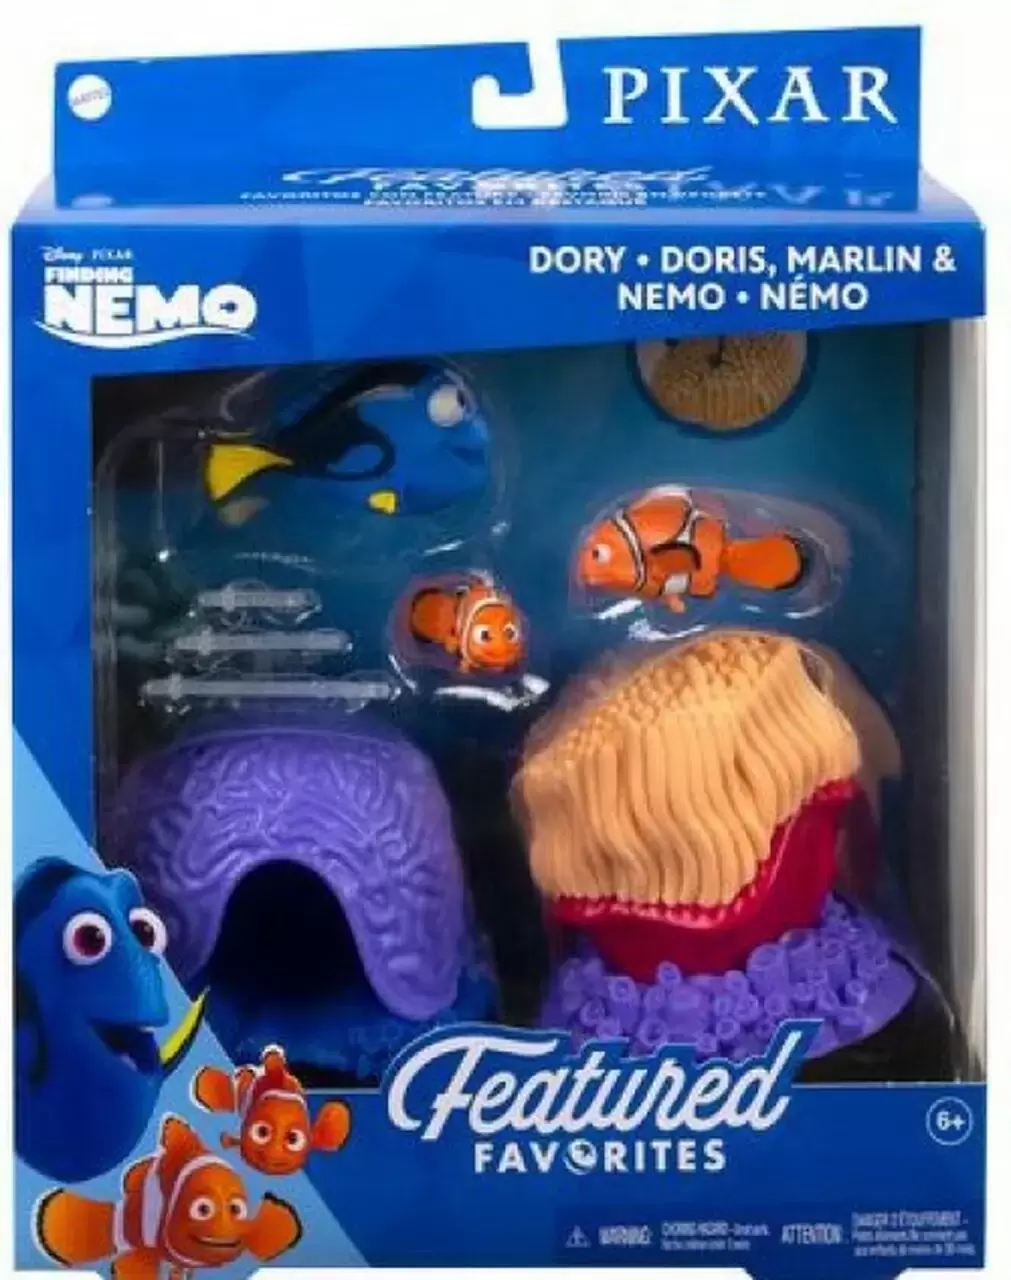 Pixar - Featured Favorites - Nemo, Marlin & Dory